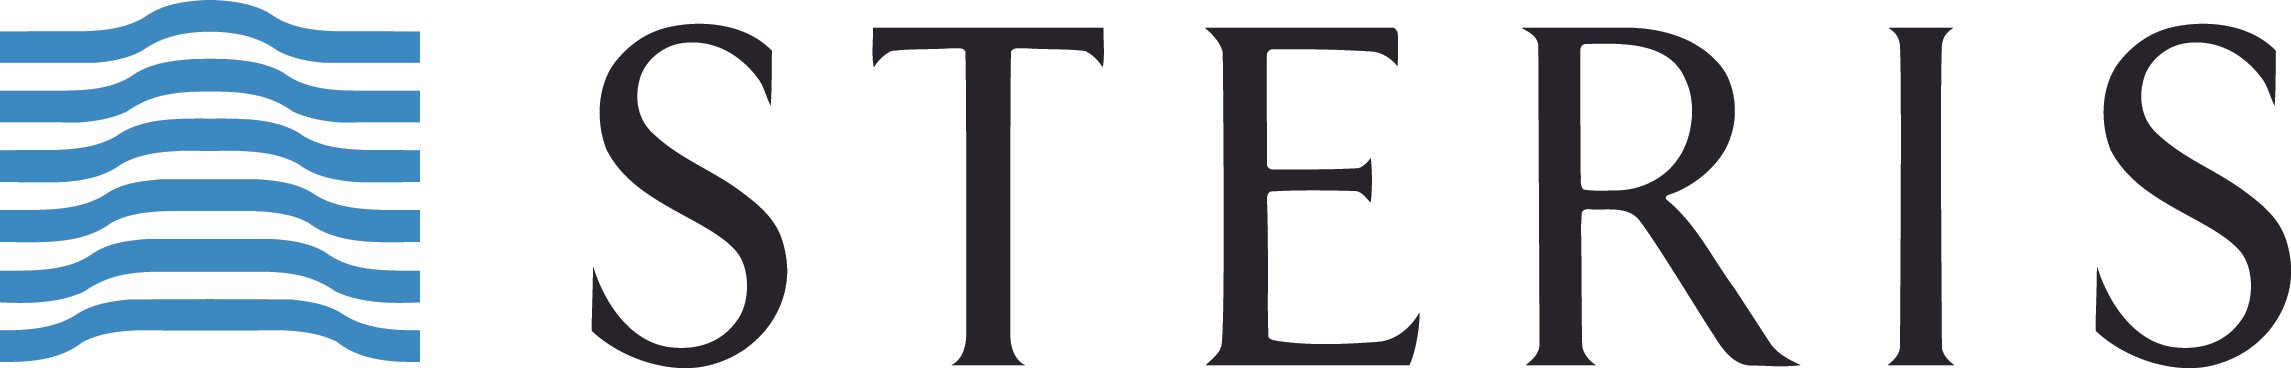 STERIS Logo Horizontal (1).jpg